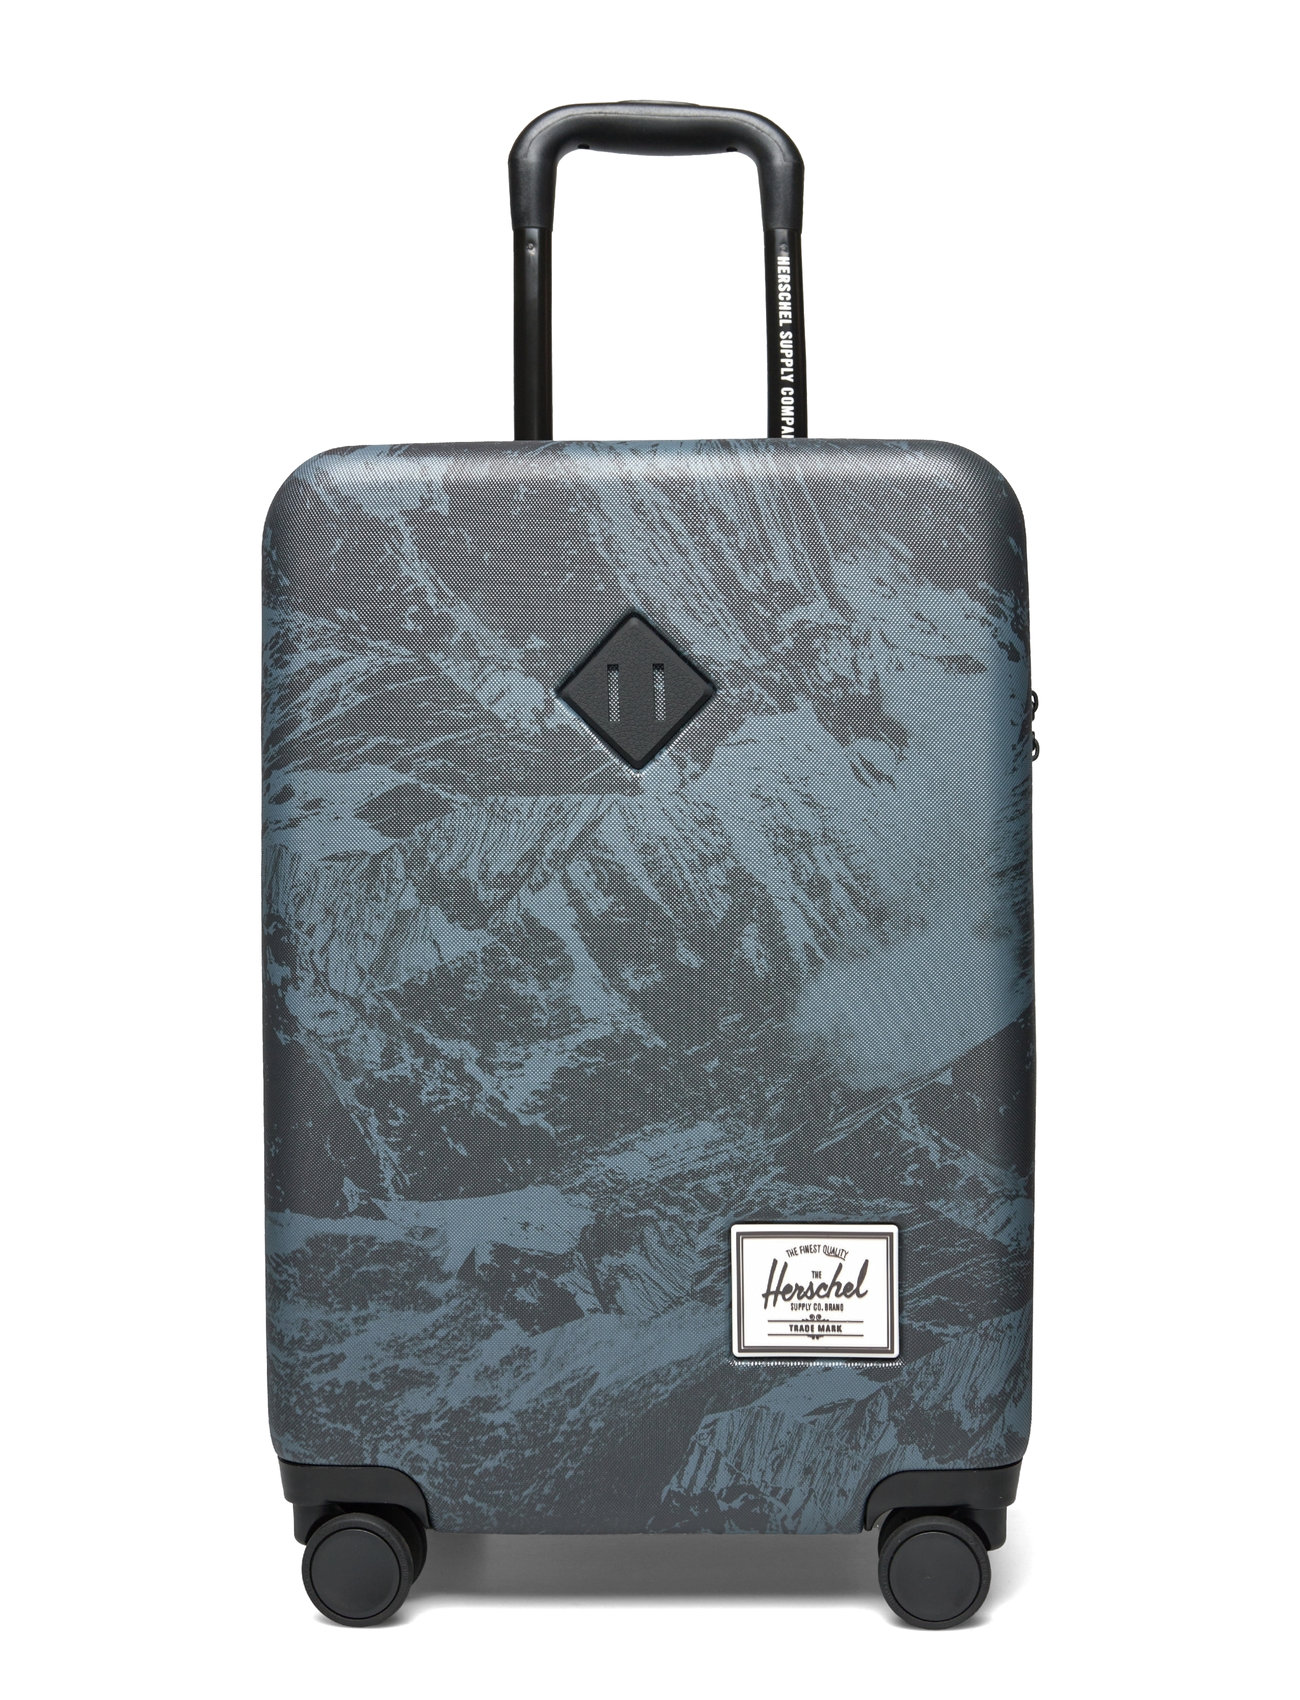 Herschel Heritage Hardshell Large Carry On Luggage Bags Suitcases Navy Herschel